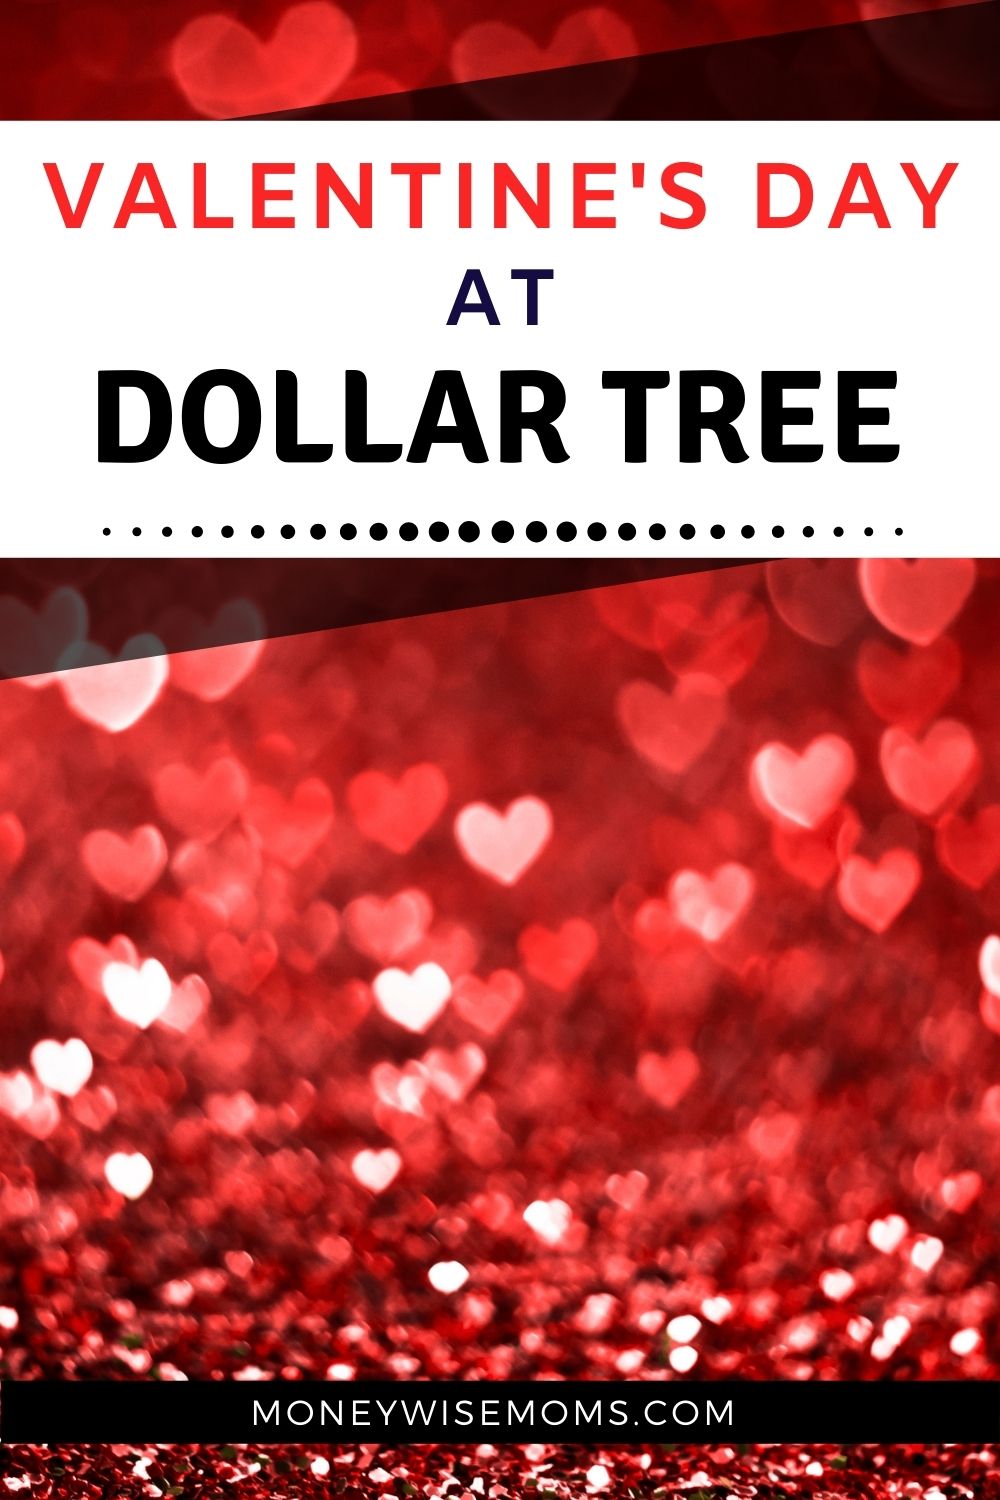 hearts background - Dollar Tree Valentine's Day